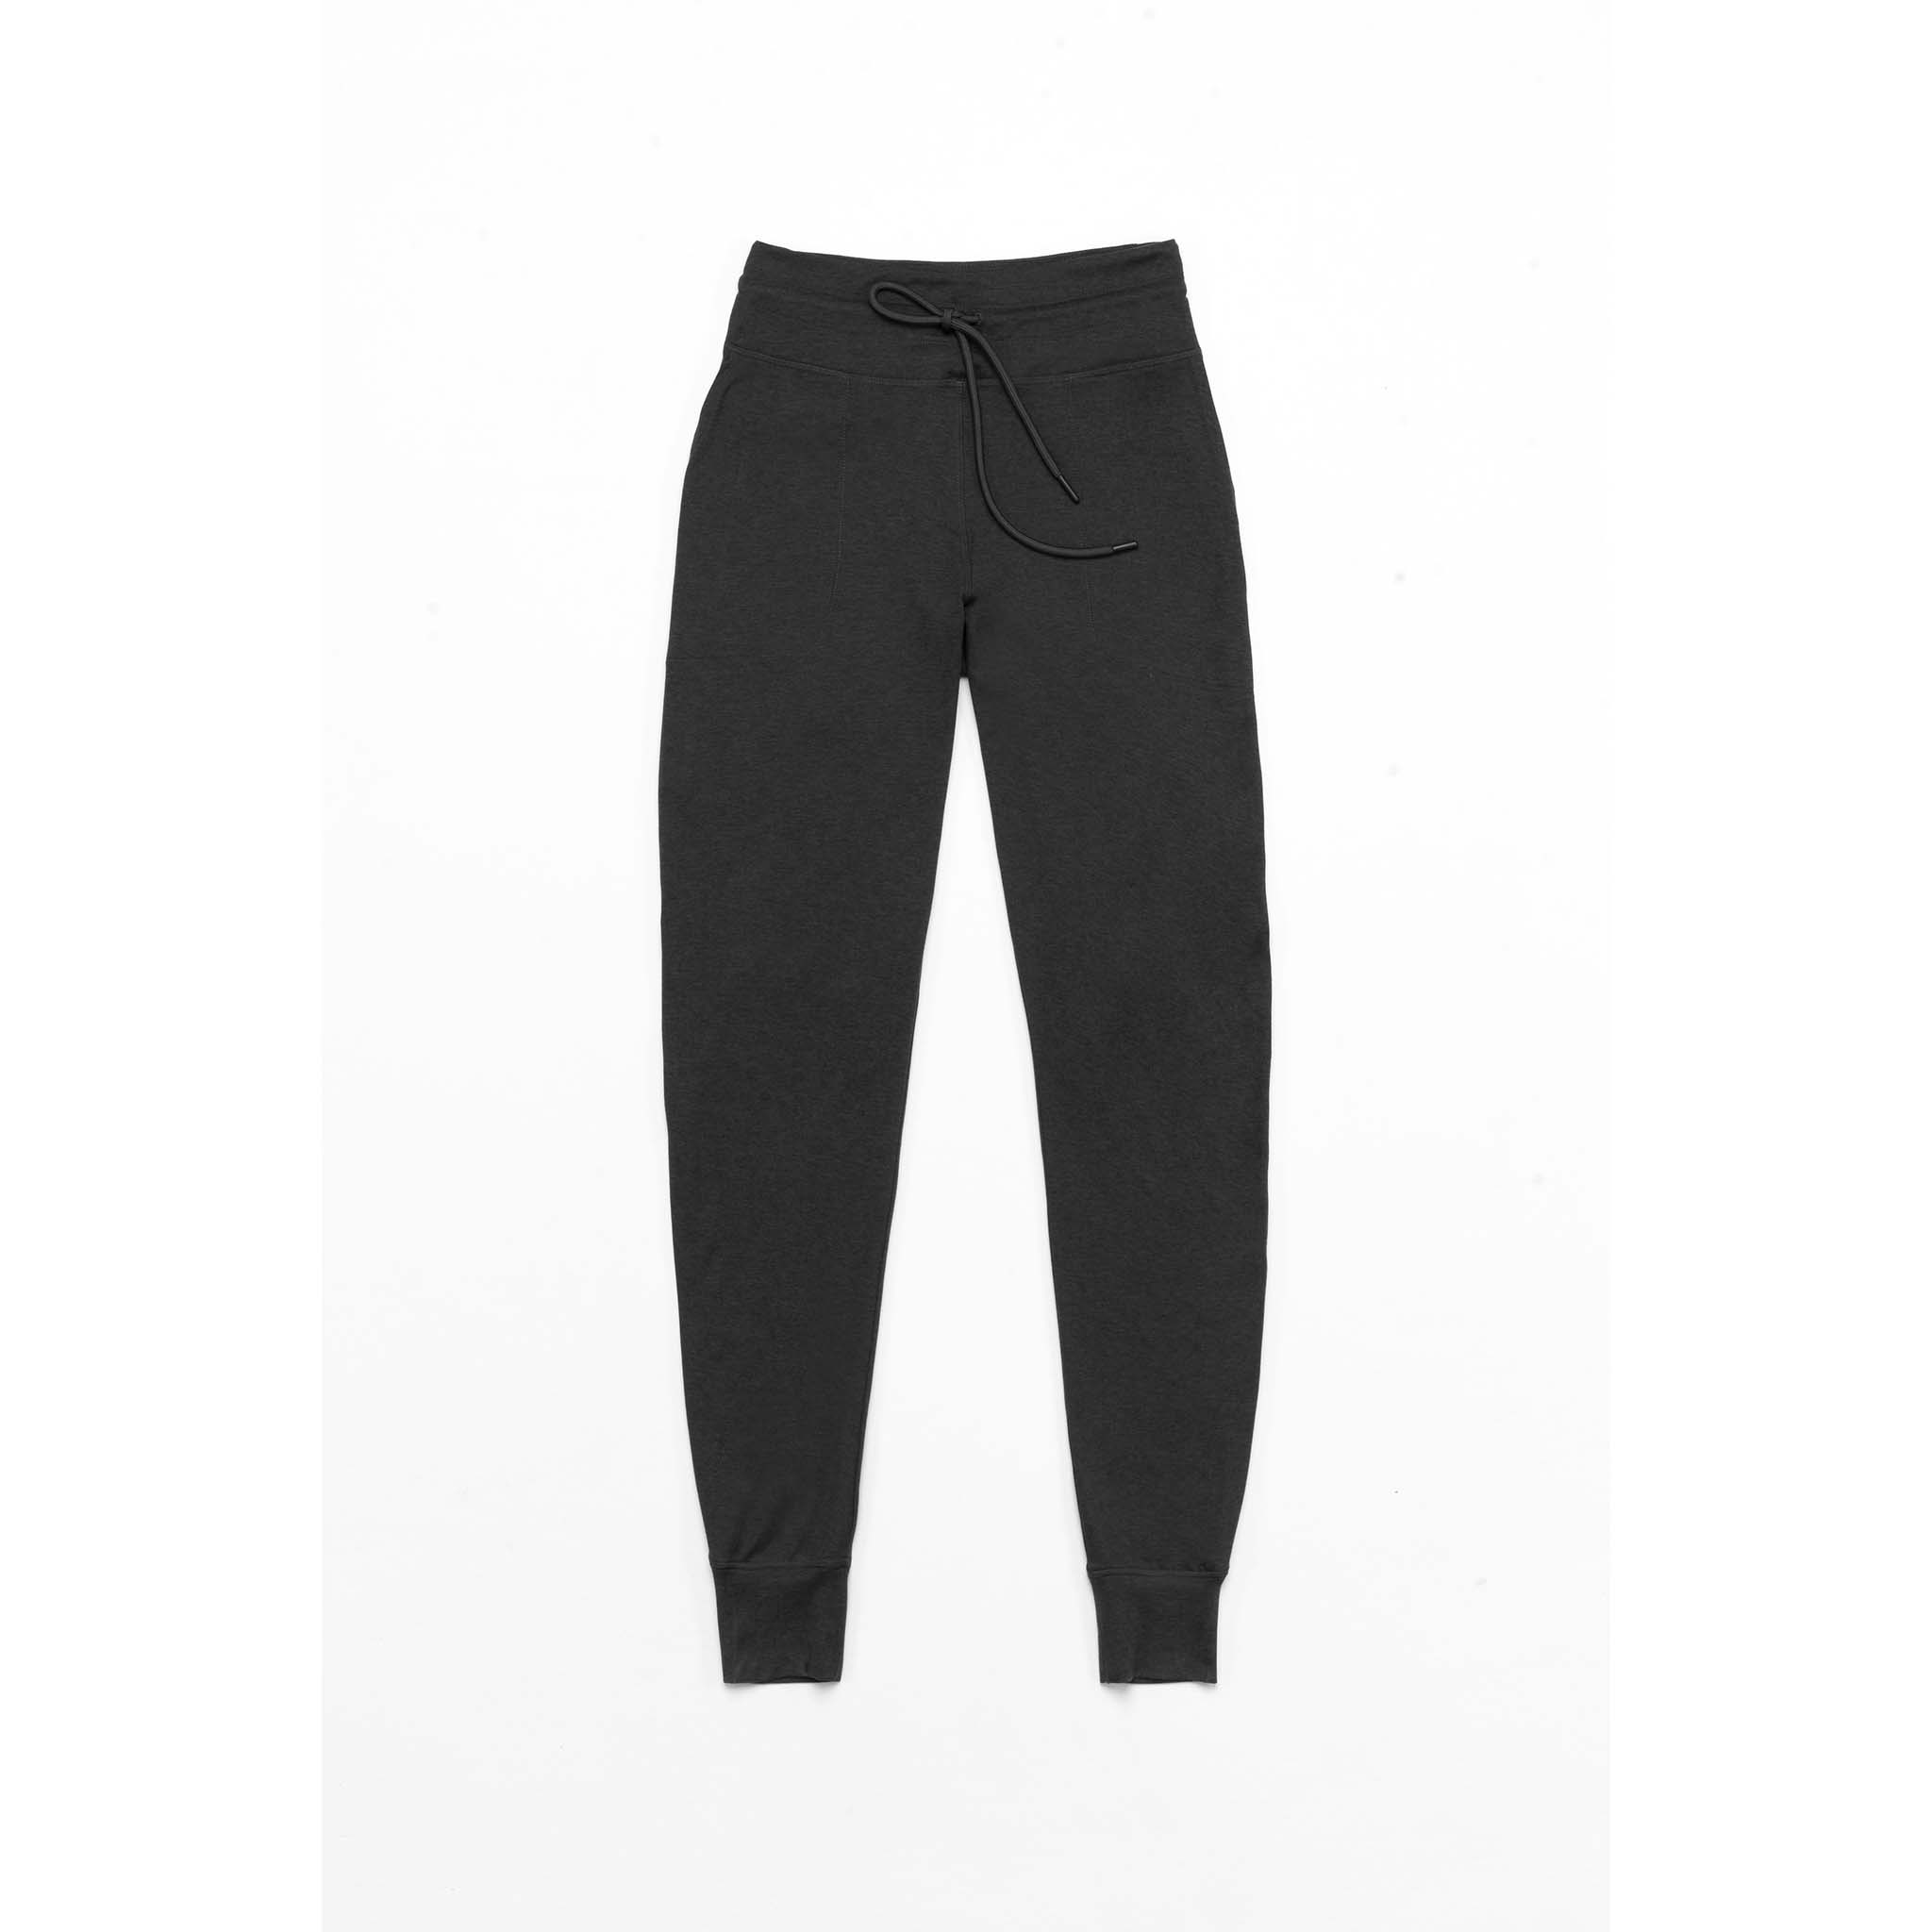 CHARLES AND A HALF Black Men's Jogger Pants size L zip pocket | eBay